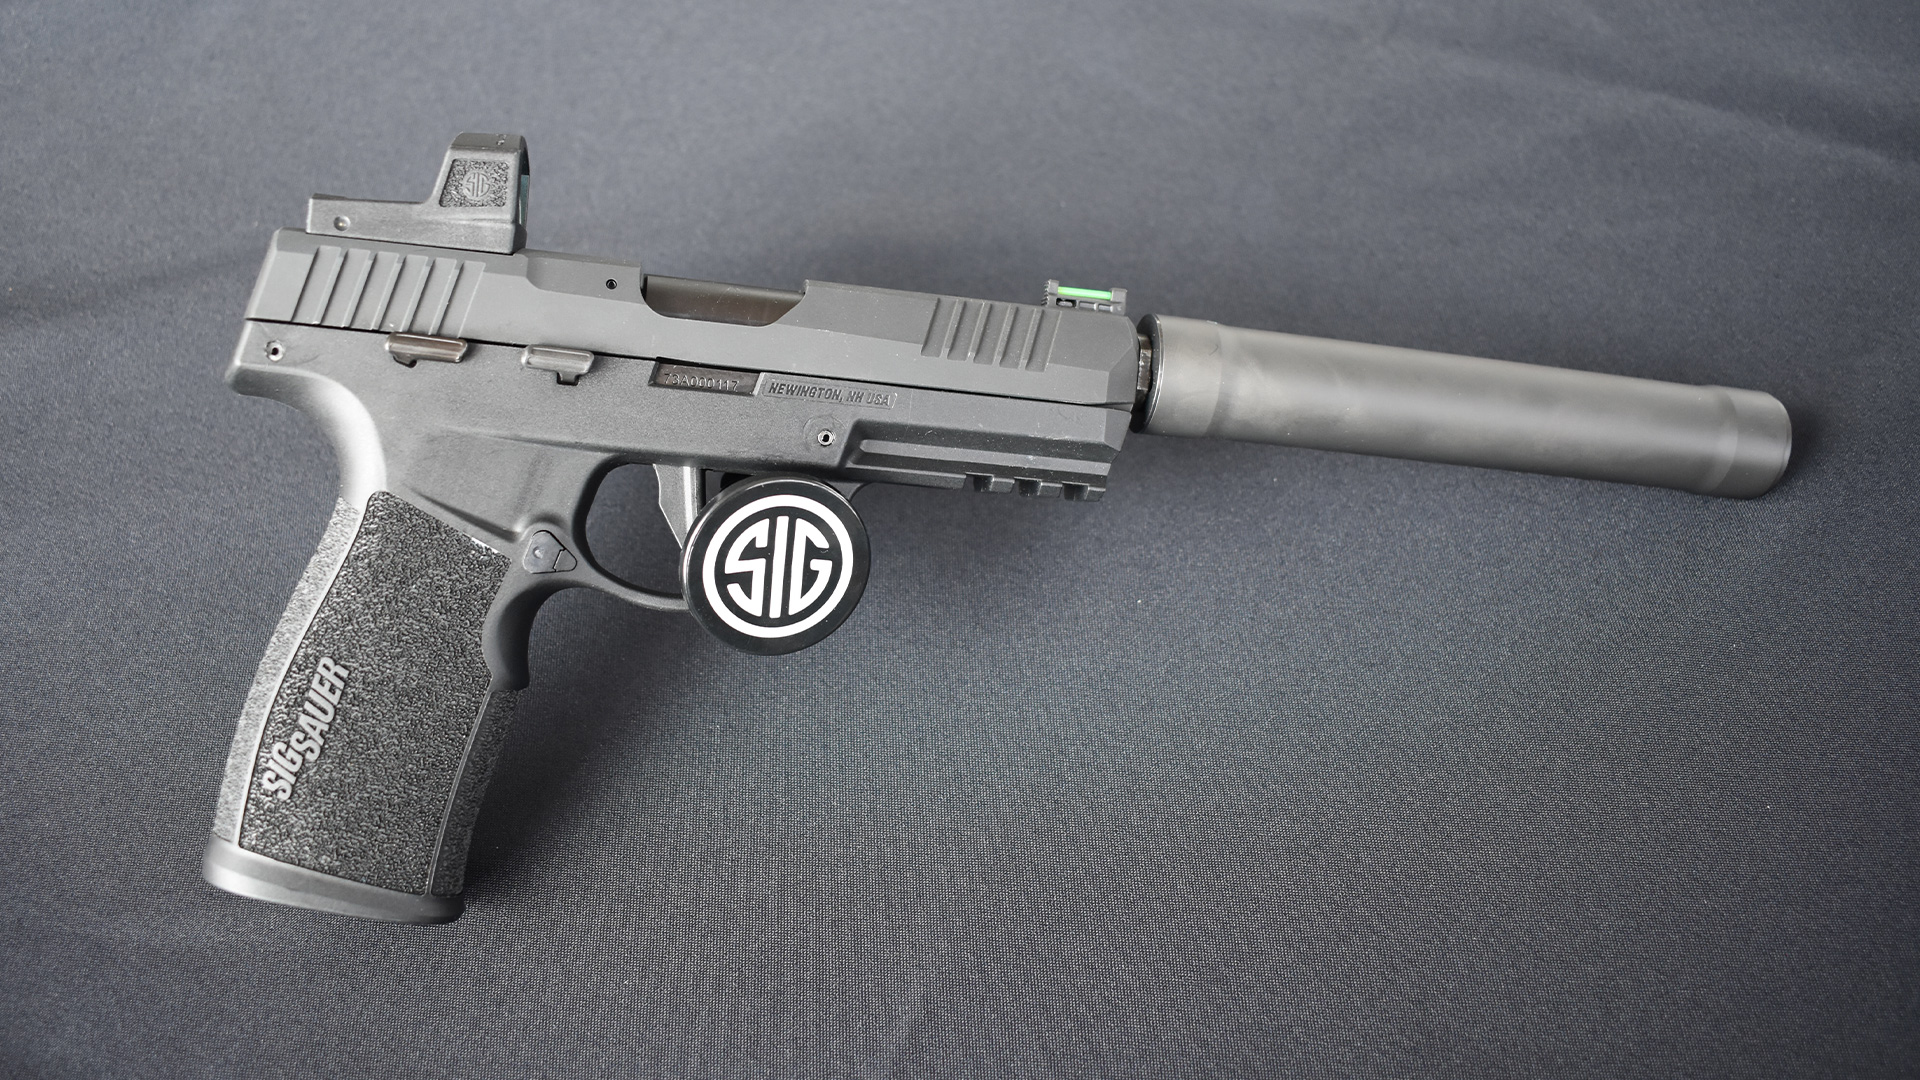 SIG SRD22X suppressor on rimfire pistol